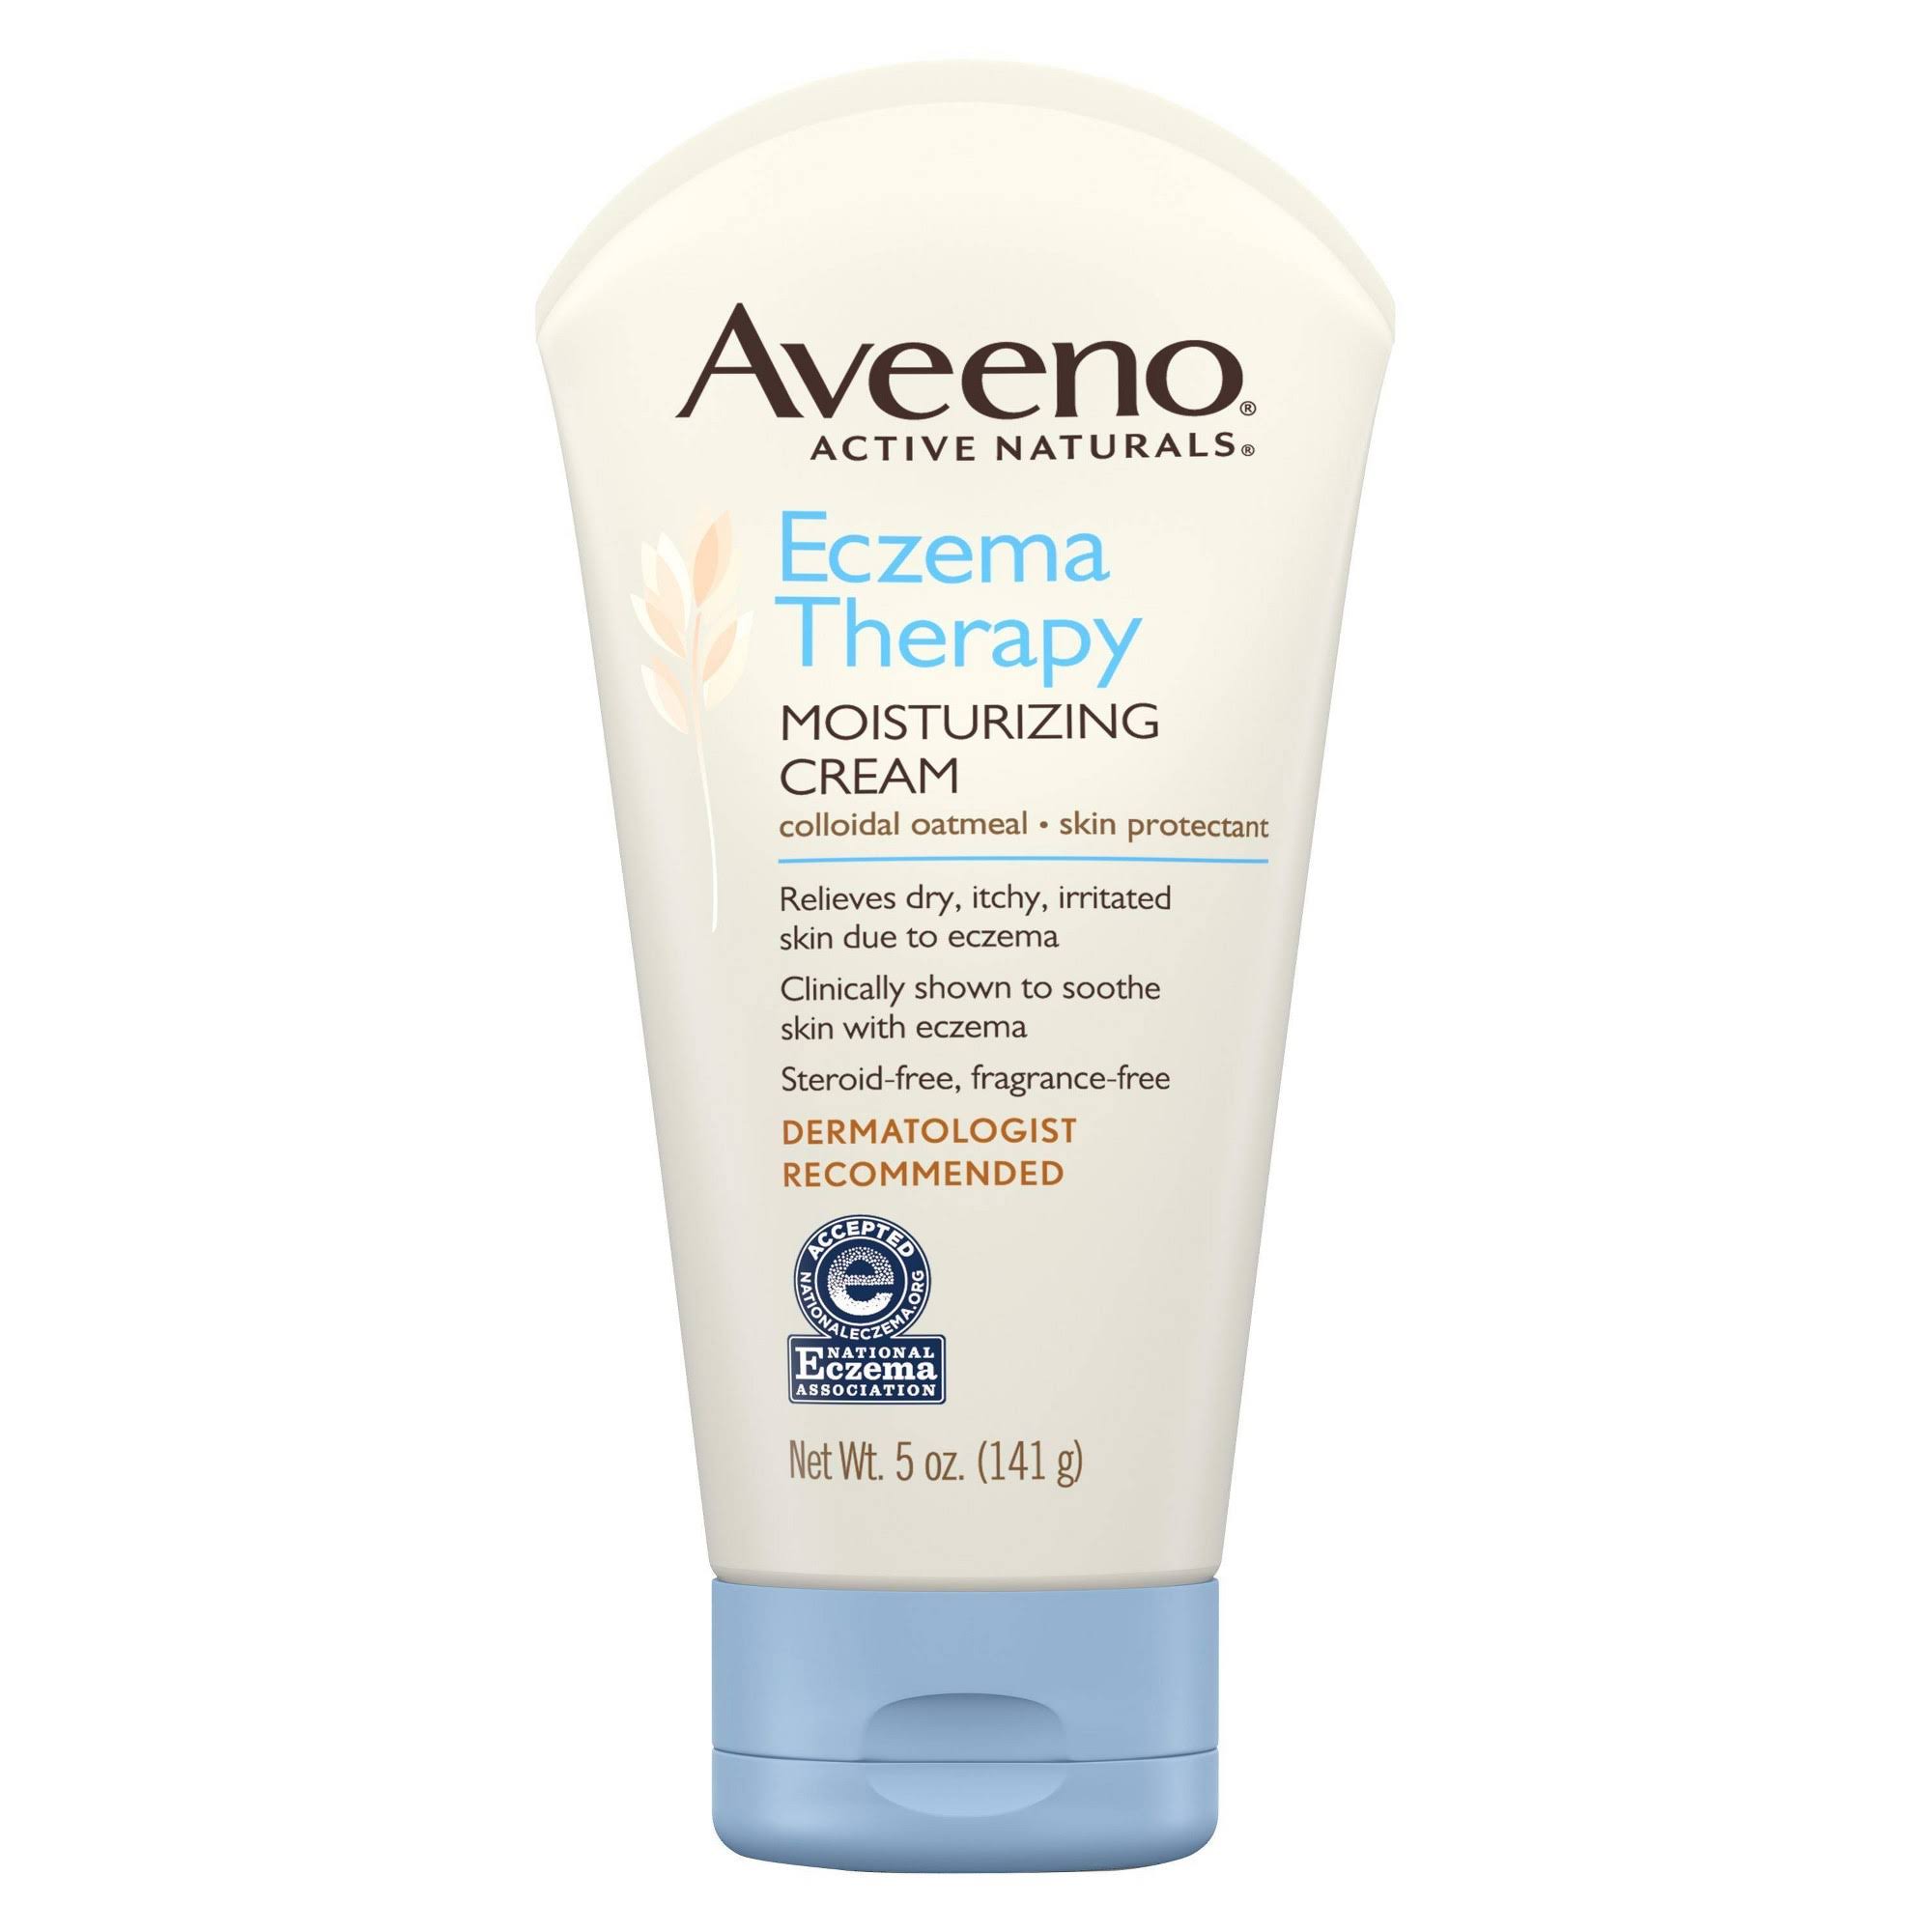 Aveeno Eczema Therapy Moisturizing Cream - 5oz